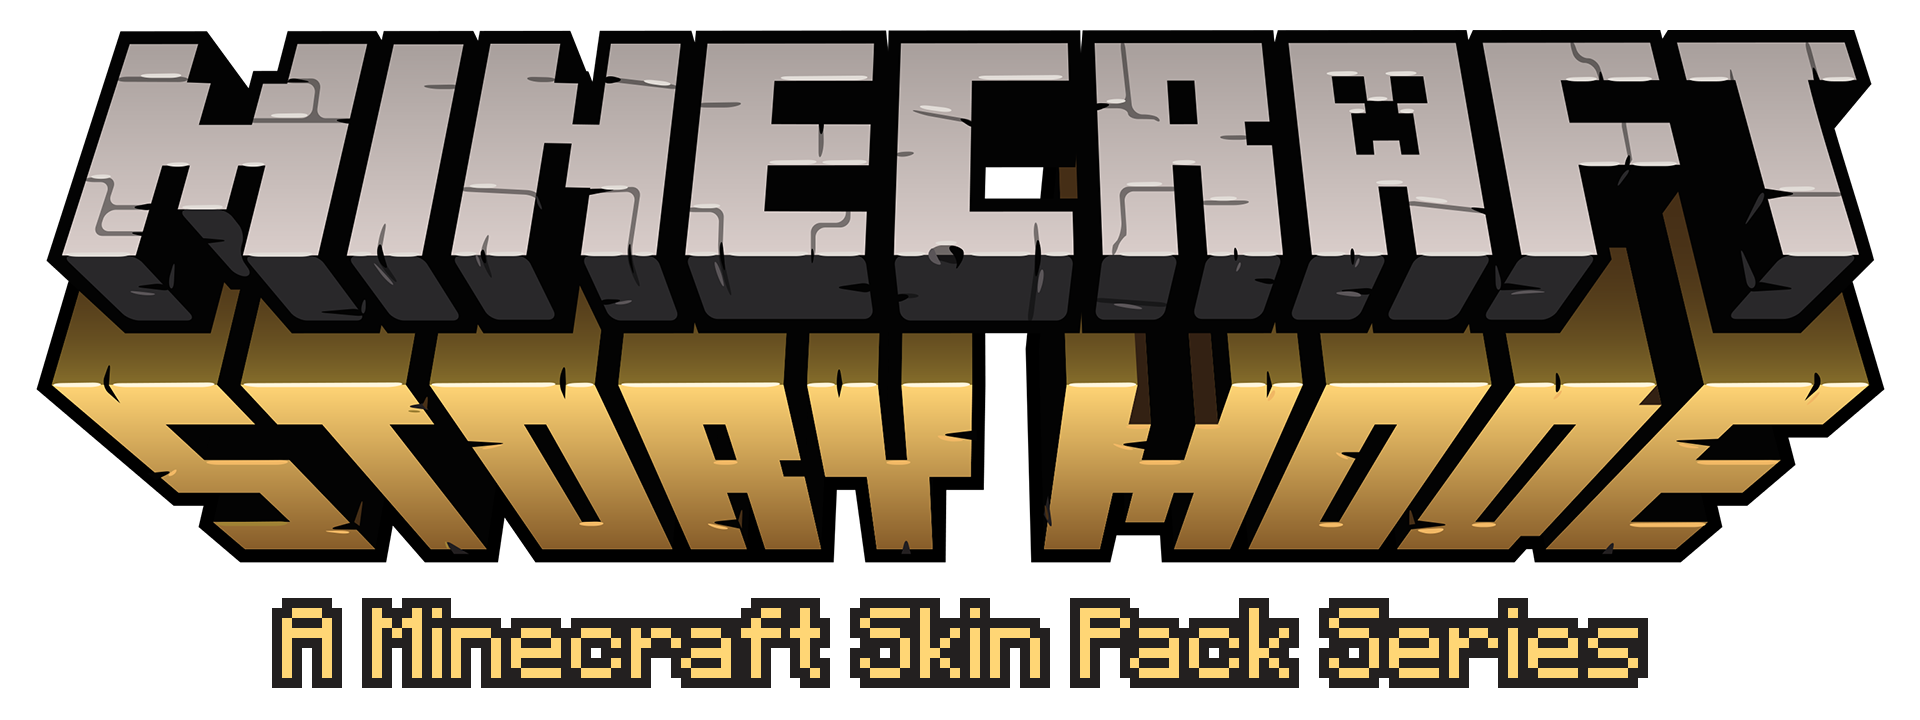 Minecraft: Story Mode Skin Pack